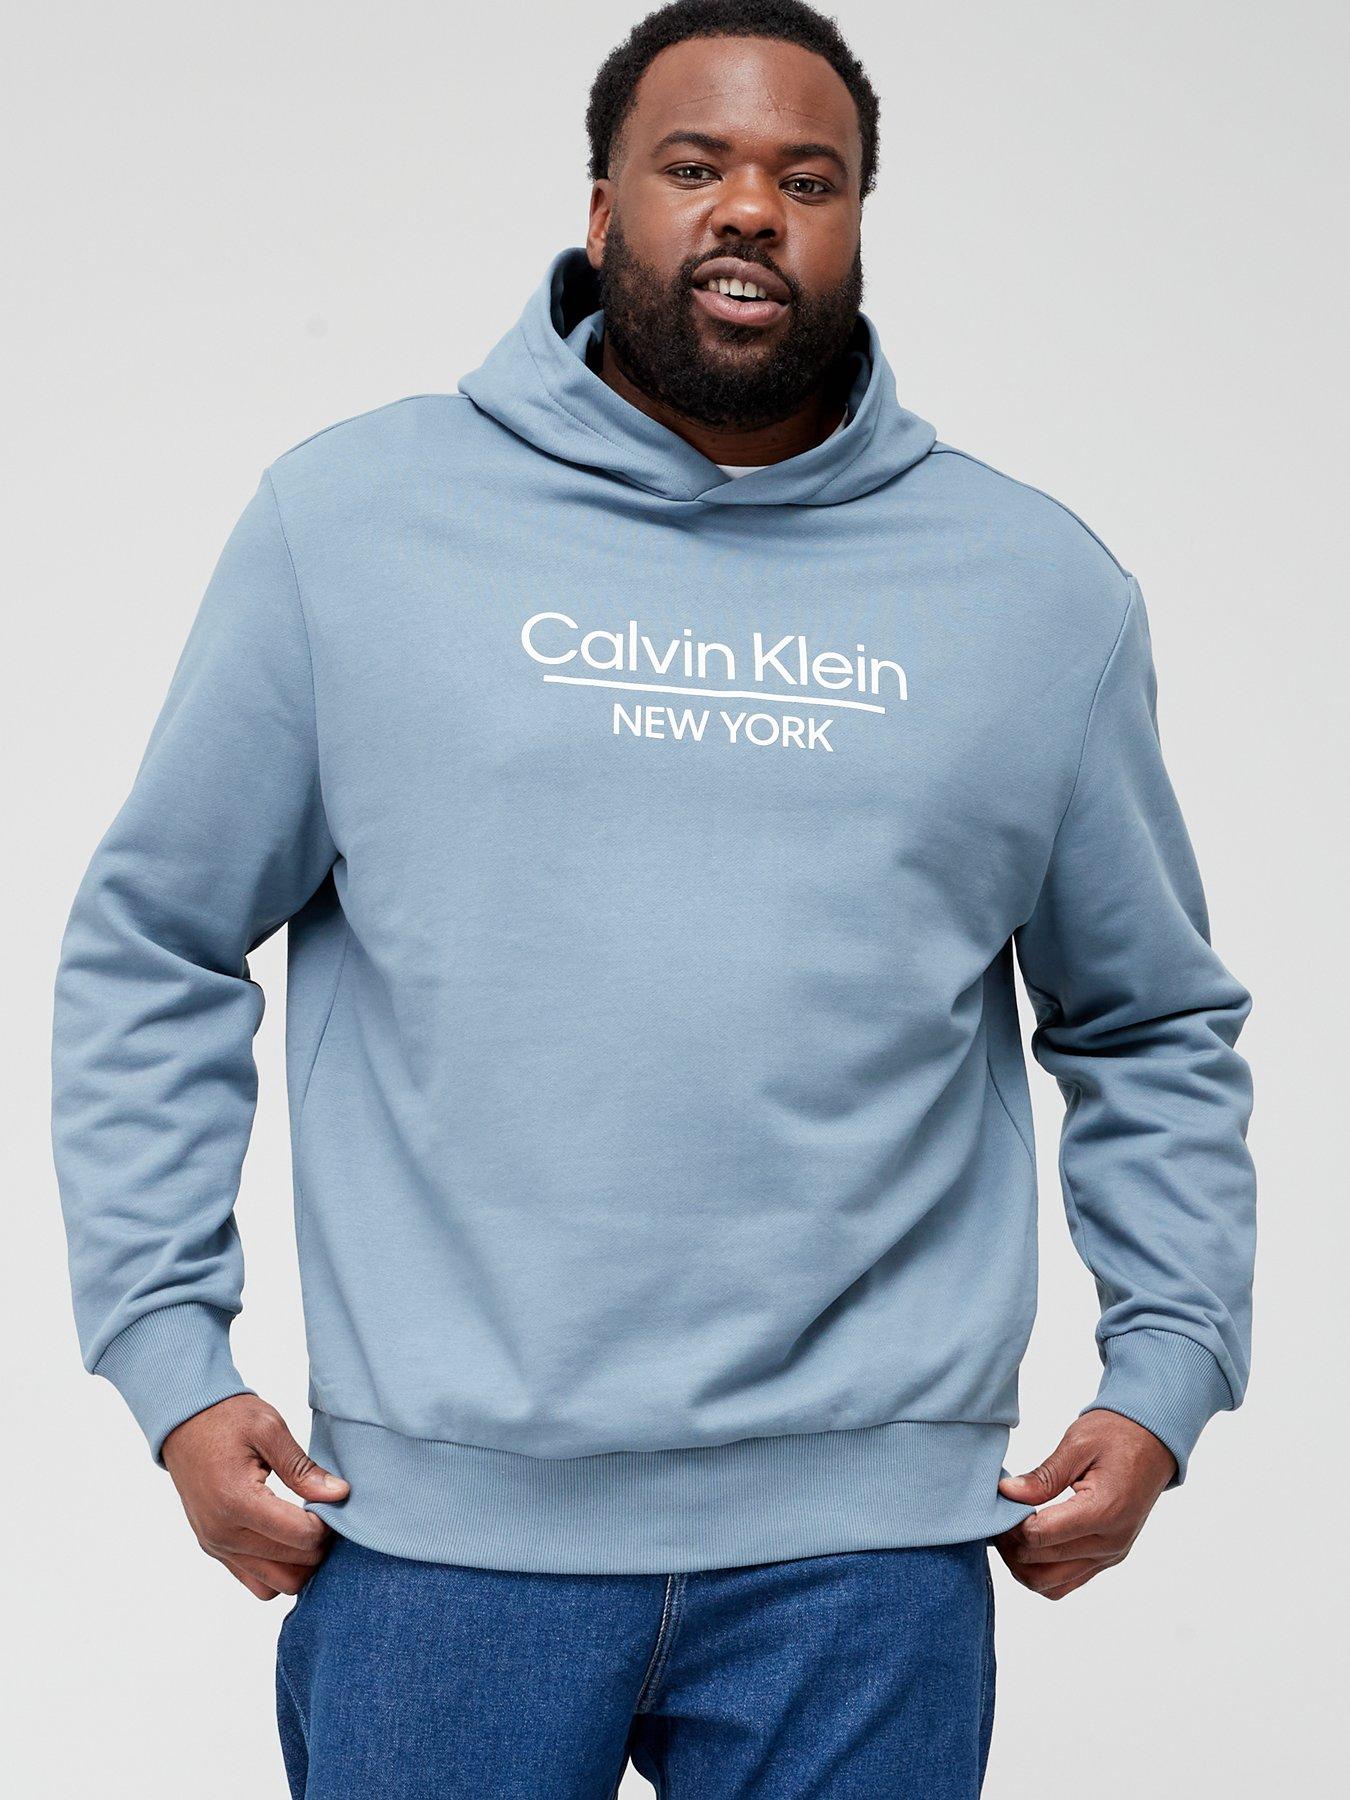 4XL | Calvin klein | Hoodies & sweatshirts | Men | Very Ireland